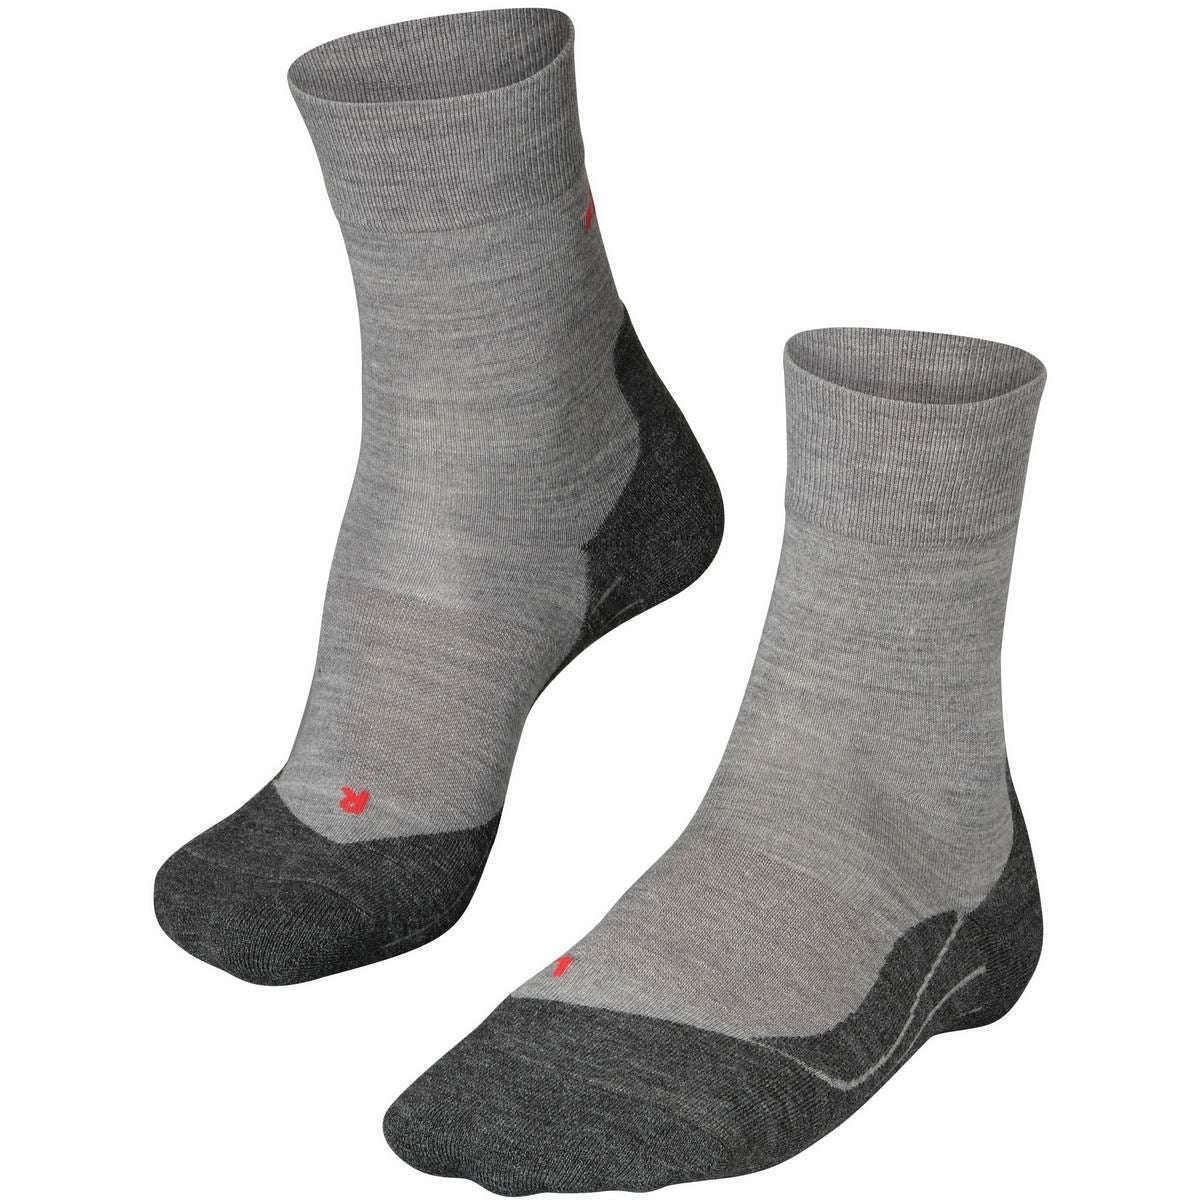 Falke Running 4 Wool Socks - Grey